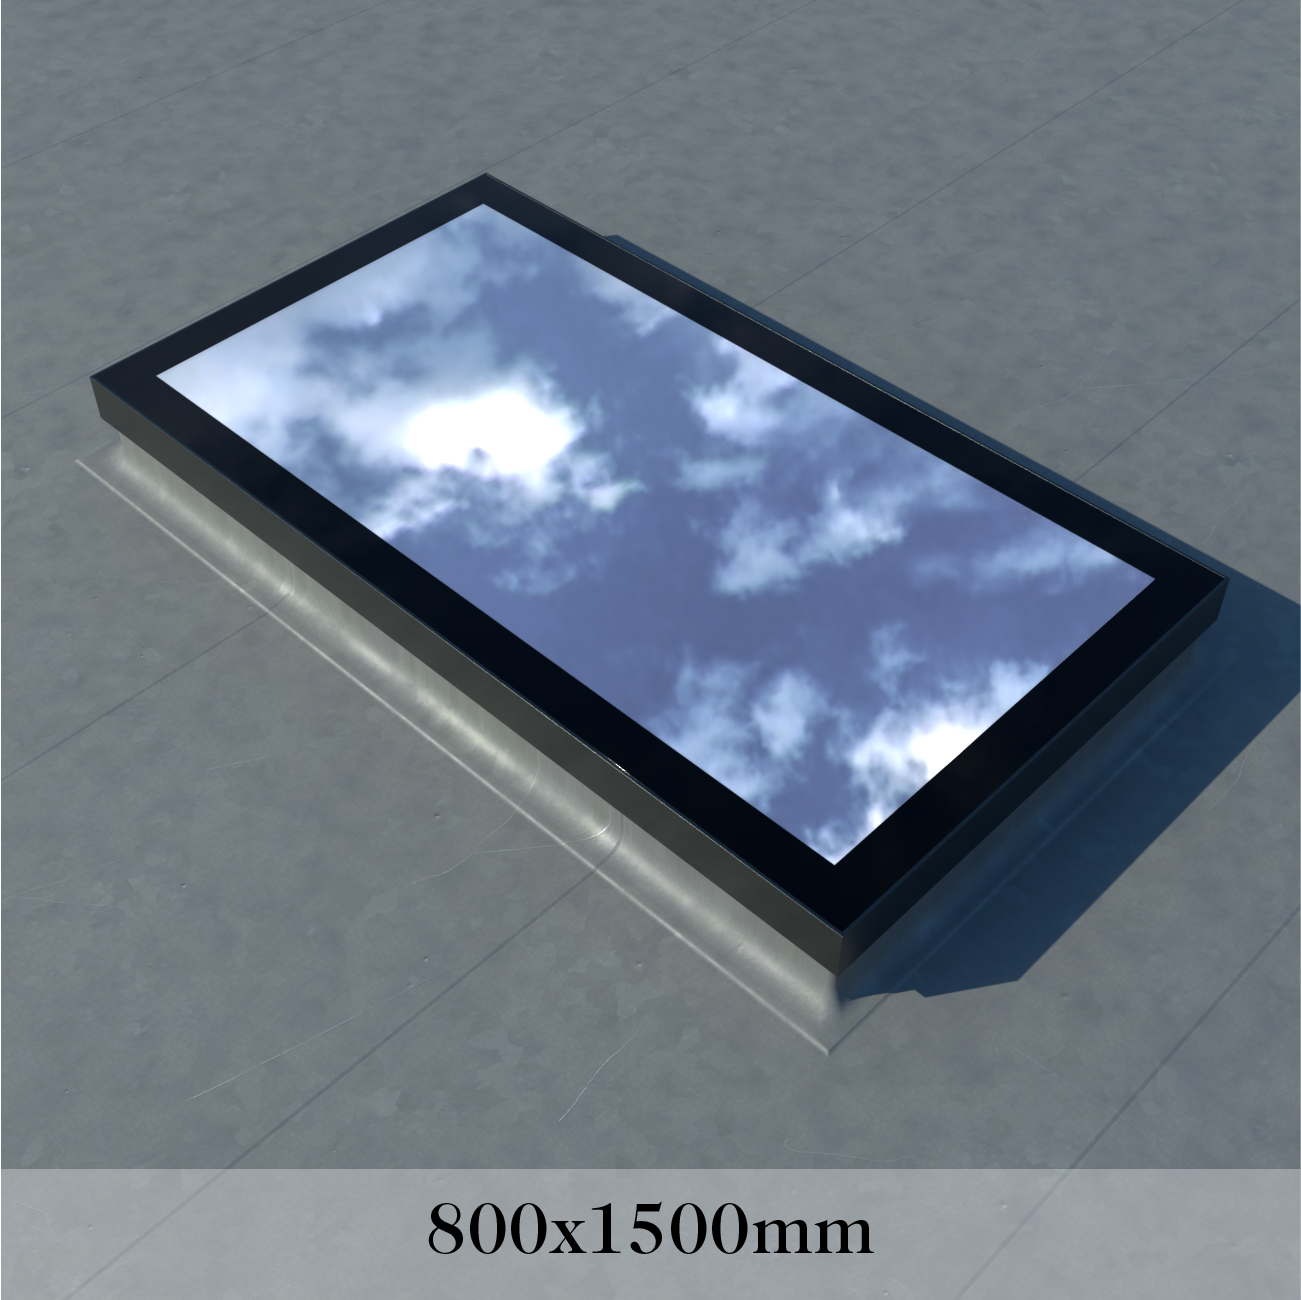 Framed Skylight 800 x 1500 mm – Double glazed